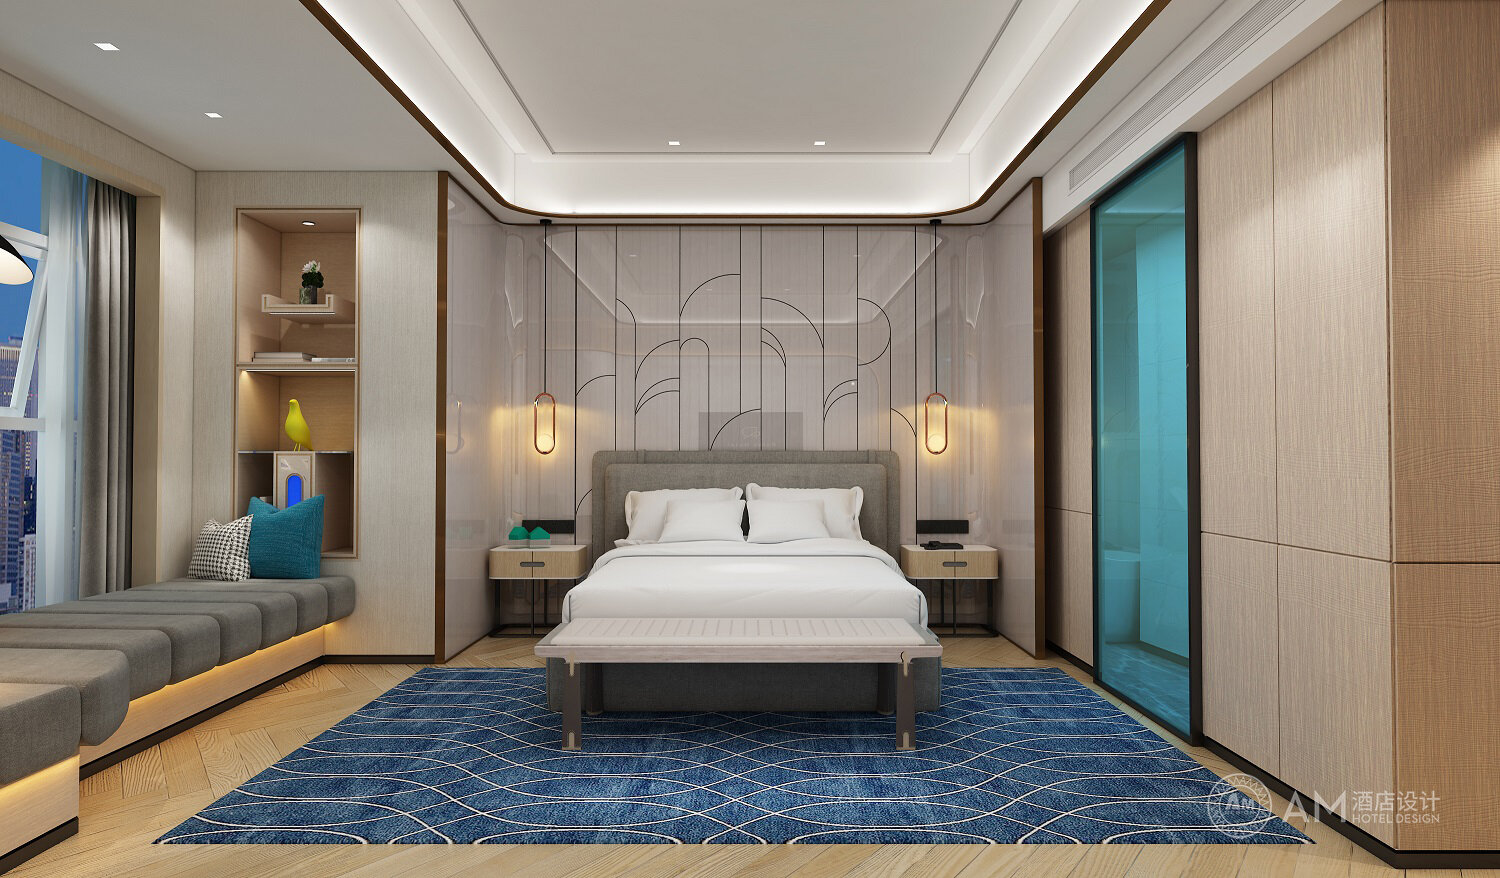 Suite design of Xi'an Yuelai Boutique Hotel